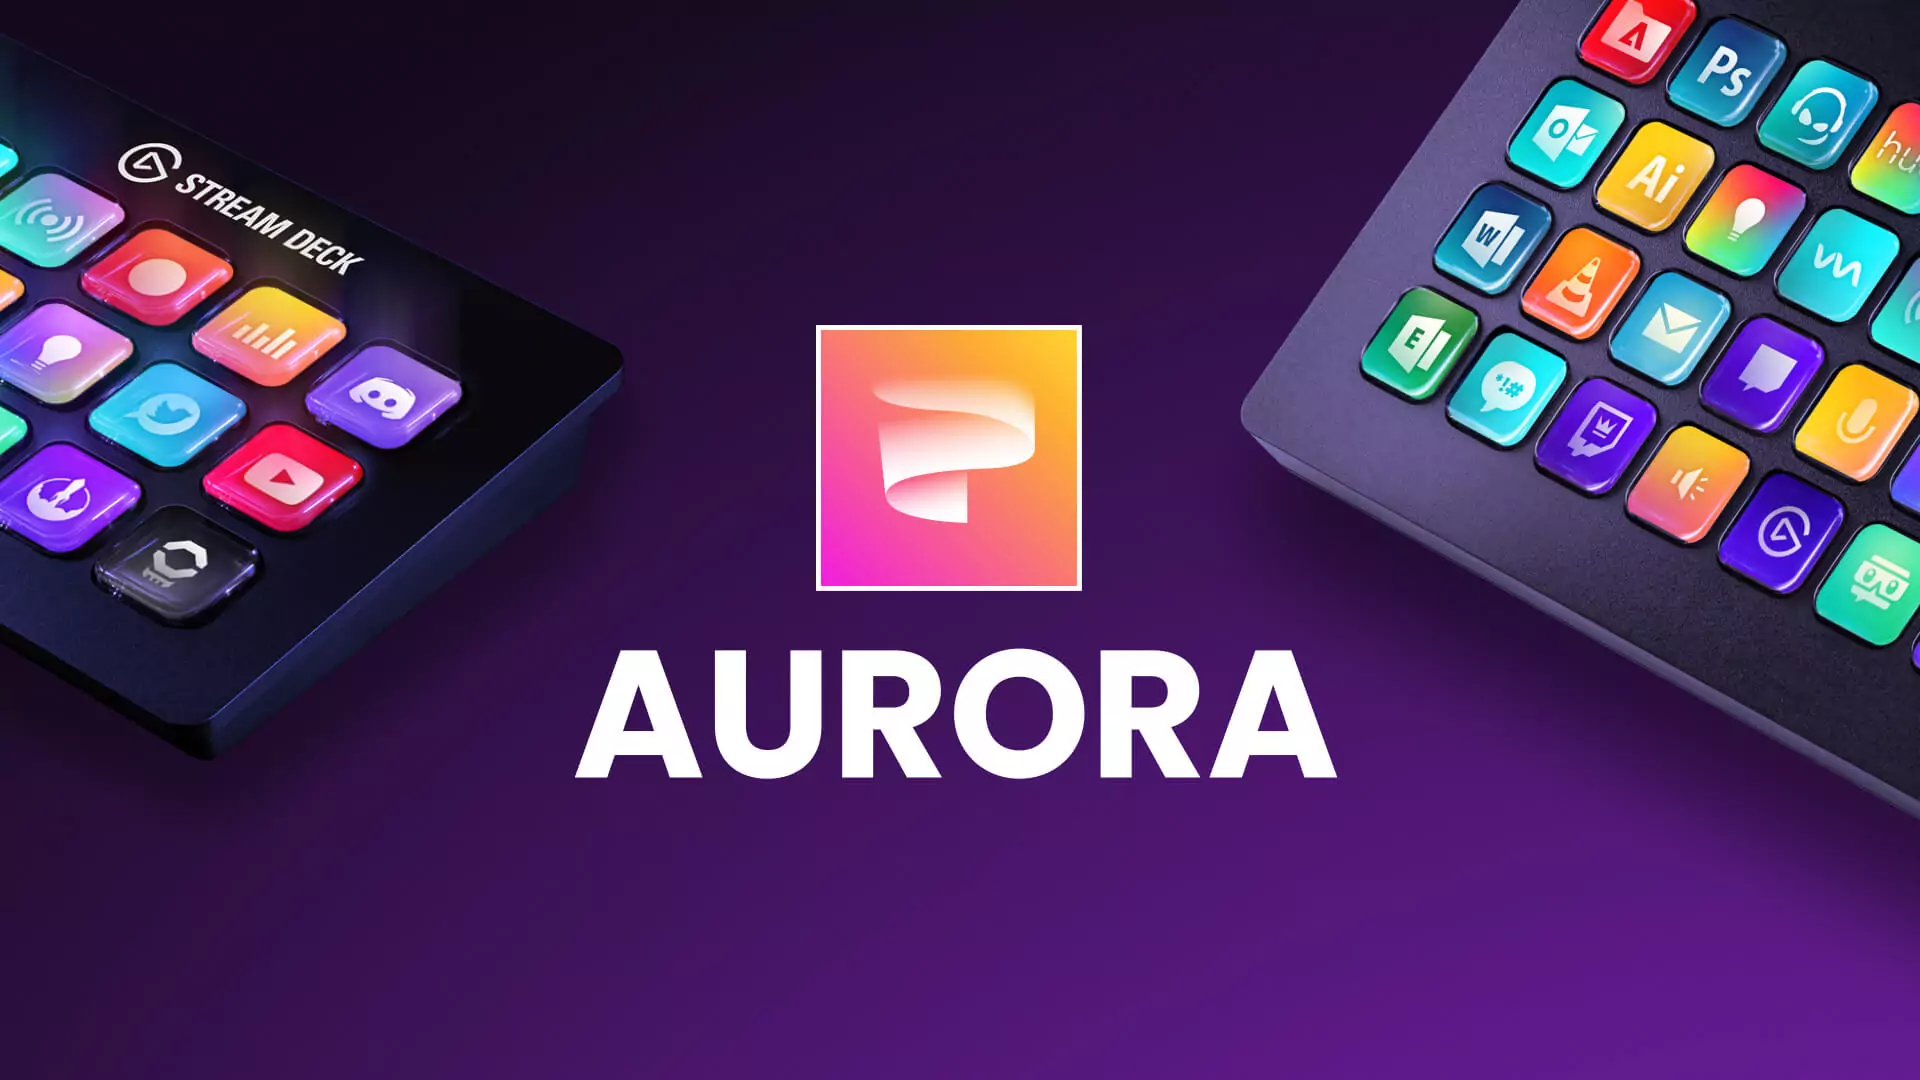 Aurora - Stream Deck Key Icons - Main Image